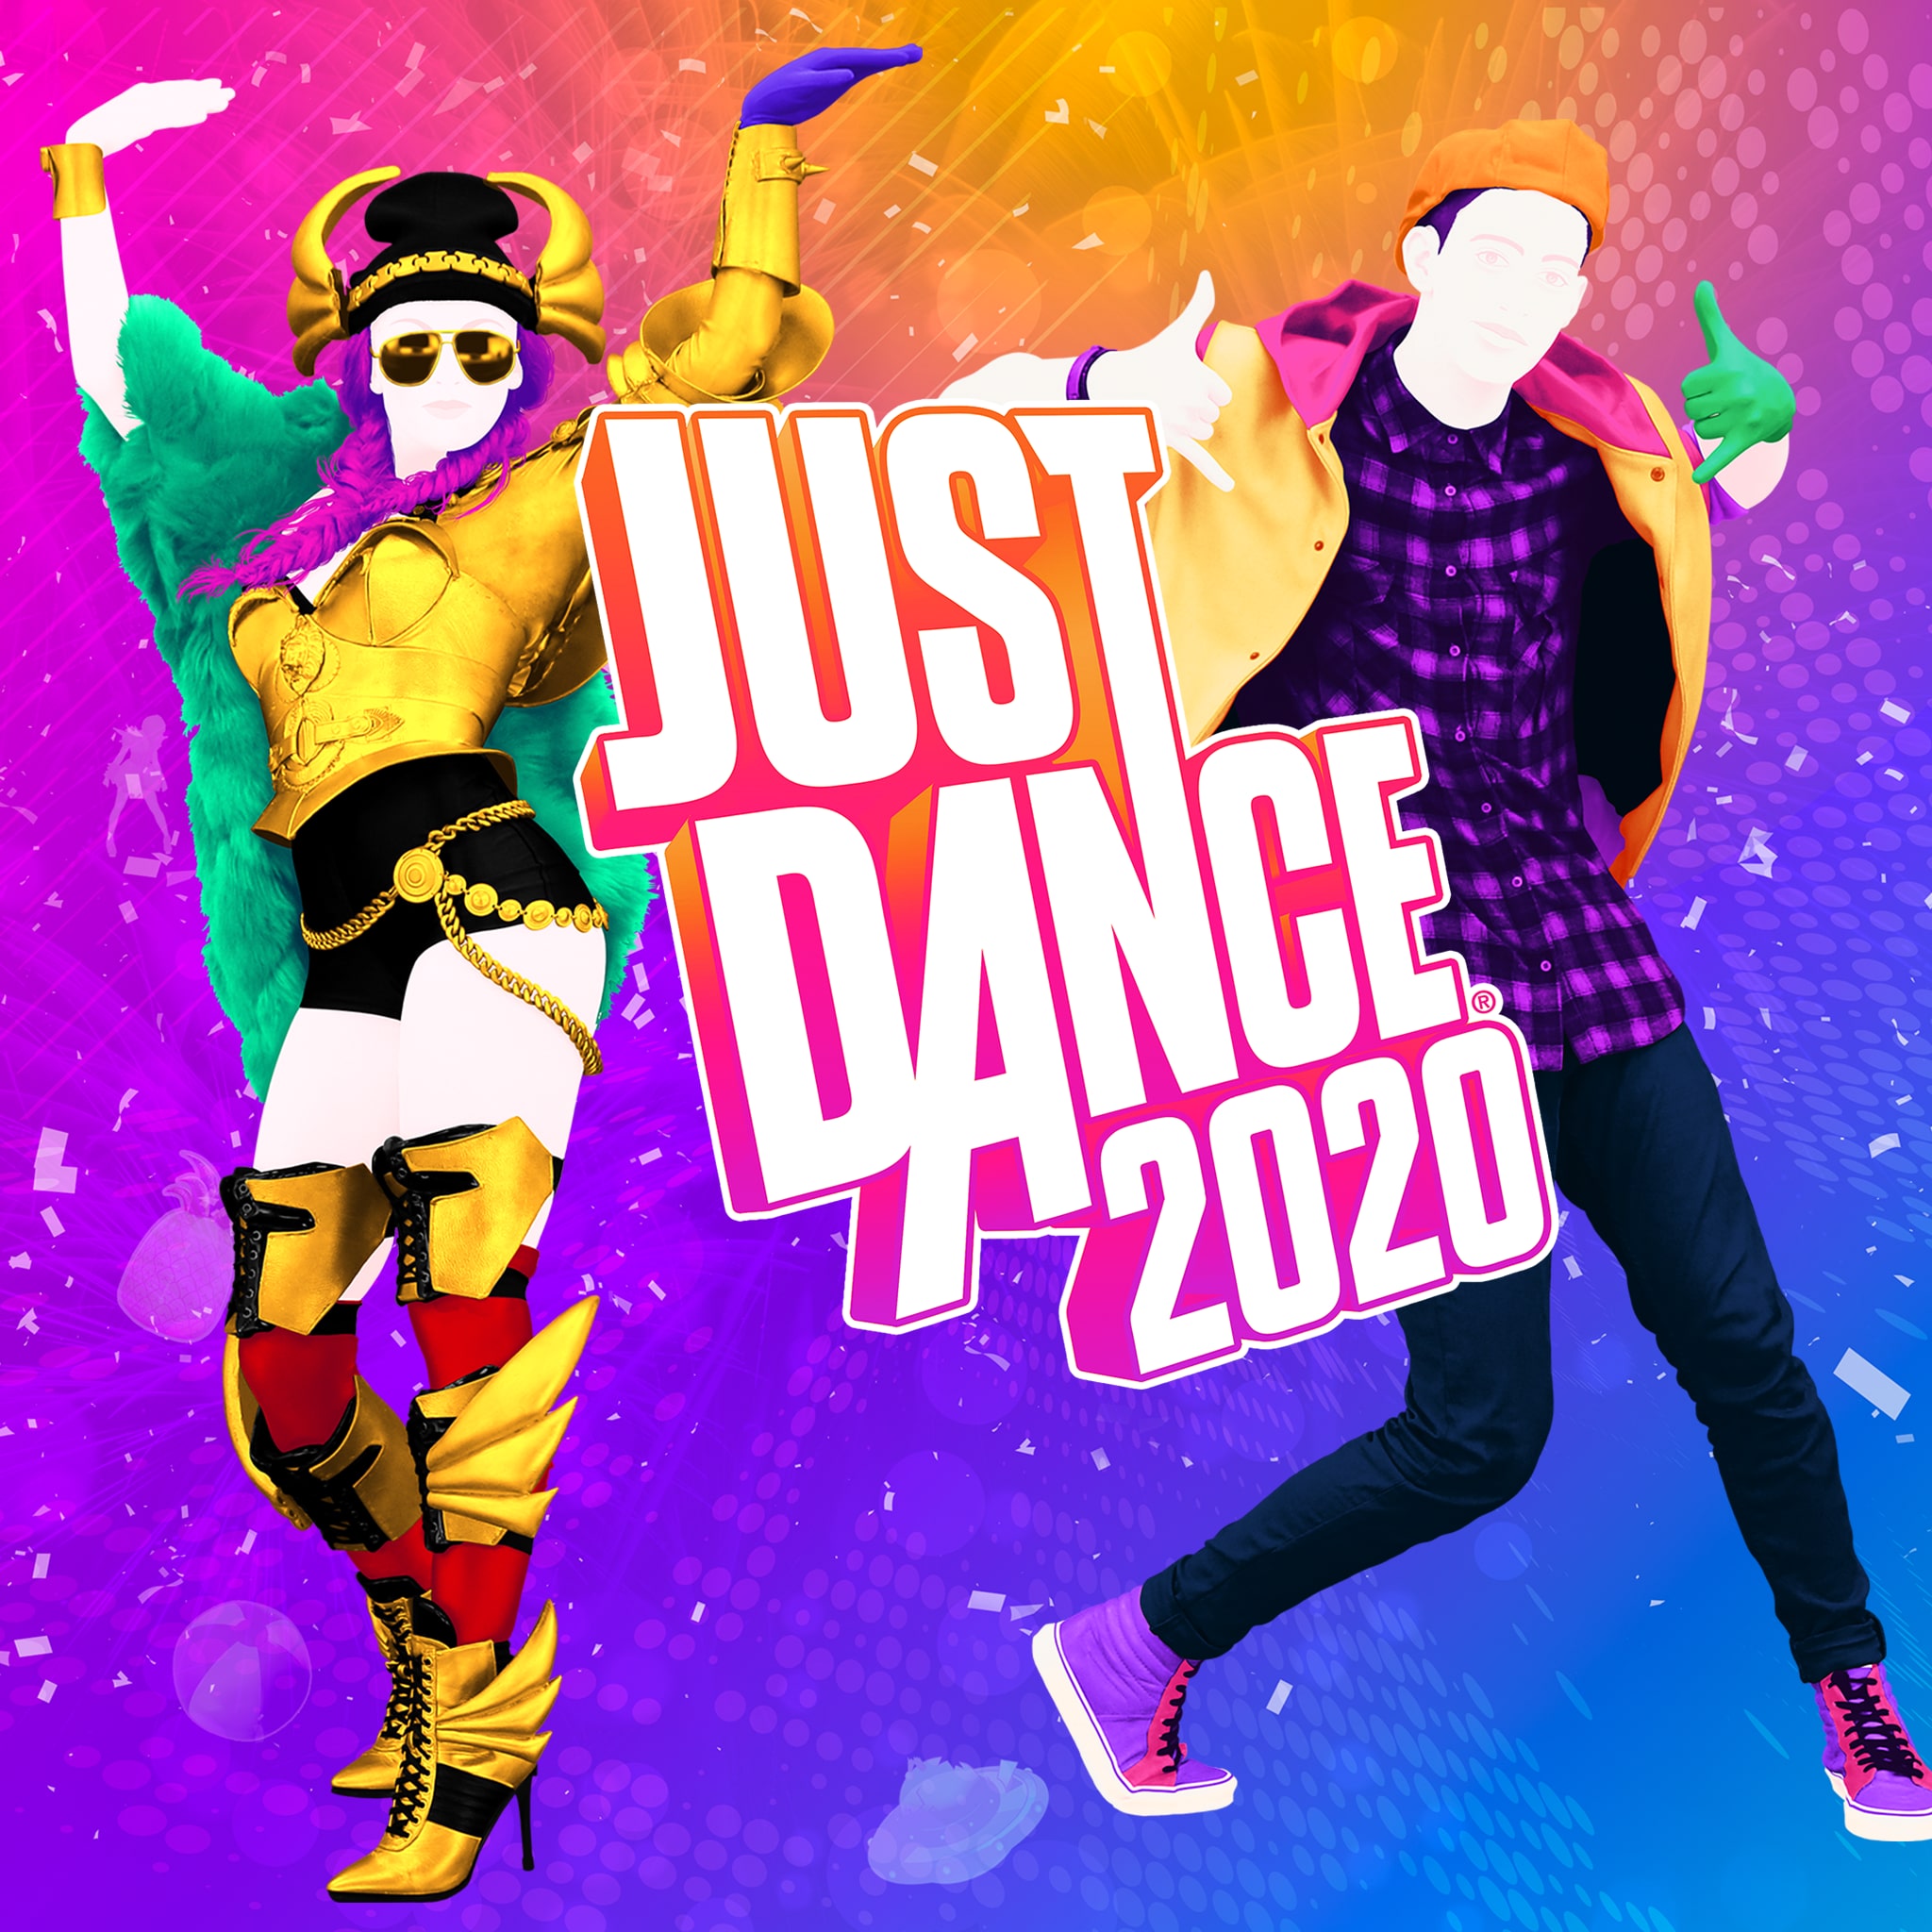 songs in just dance 2020